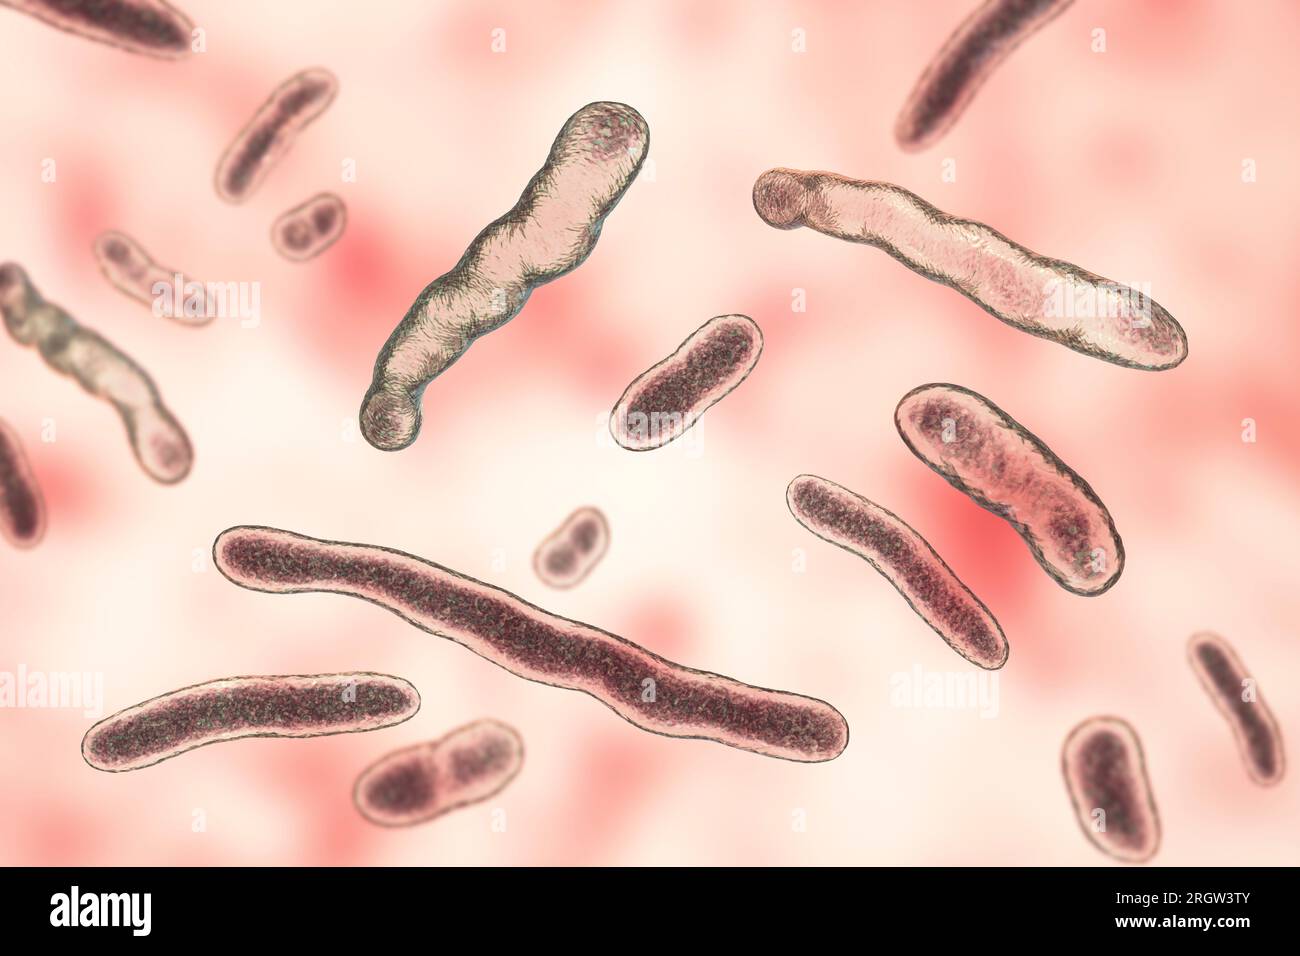 Bactérie Elizabethkingia meningoseptica, illustration Banque D'Images